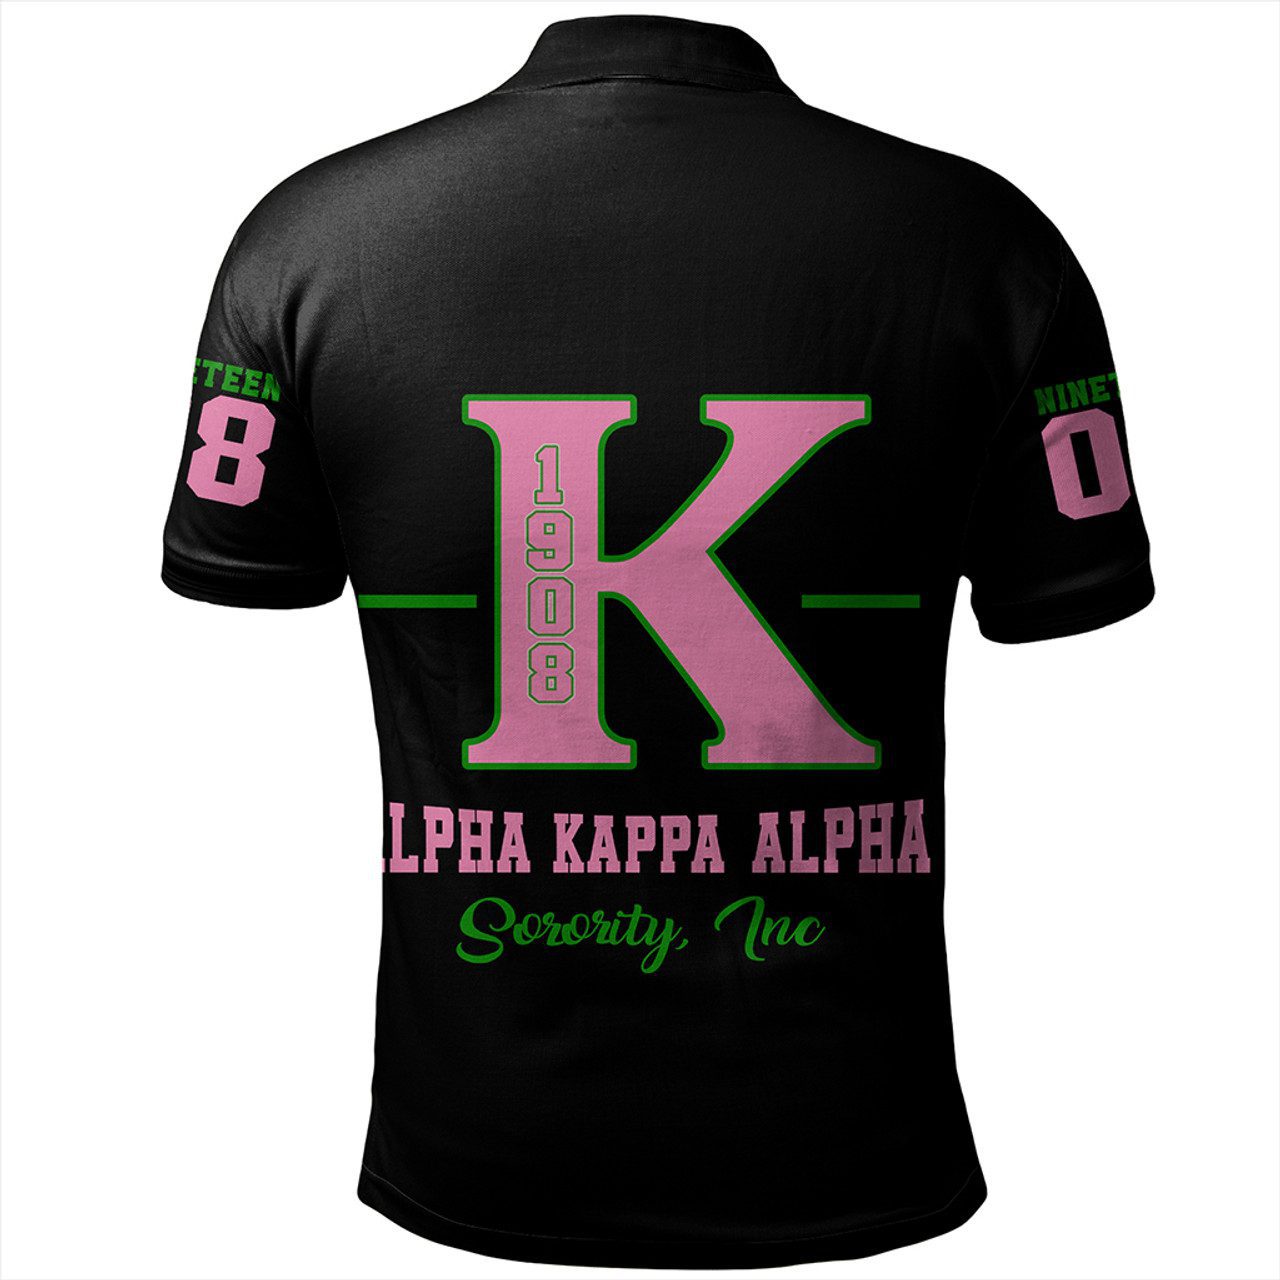 Alpha Kappa Alpha Polo Shirt Precious Pearls